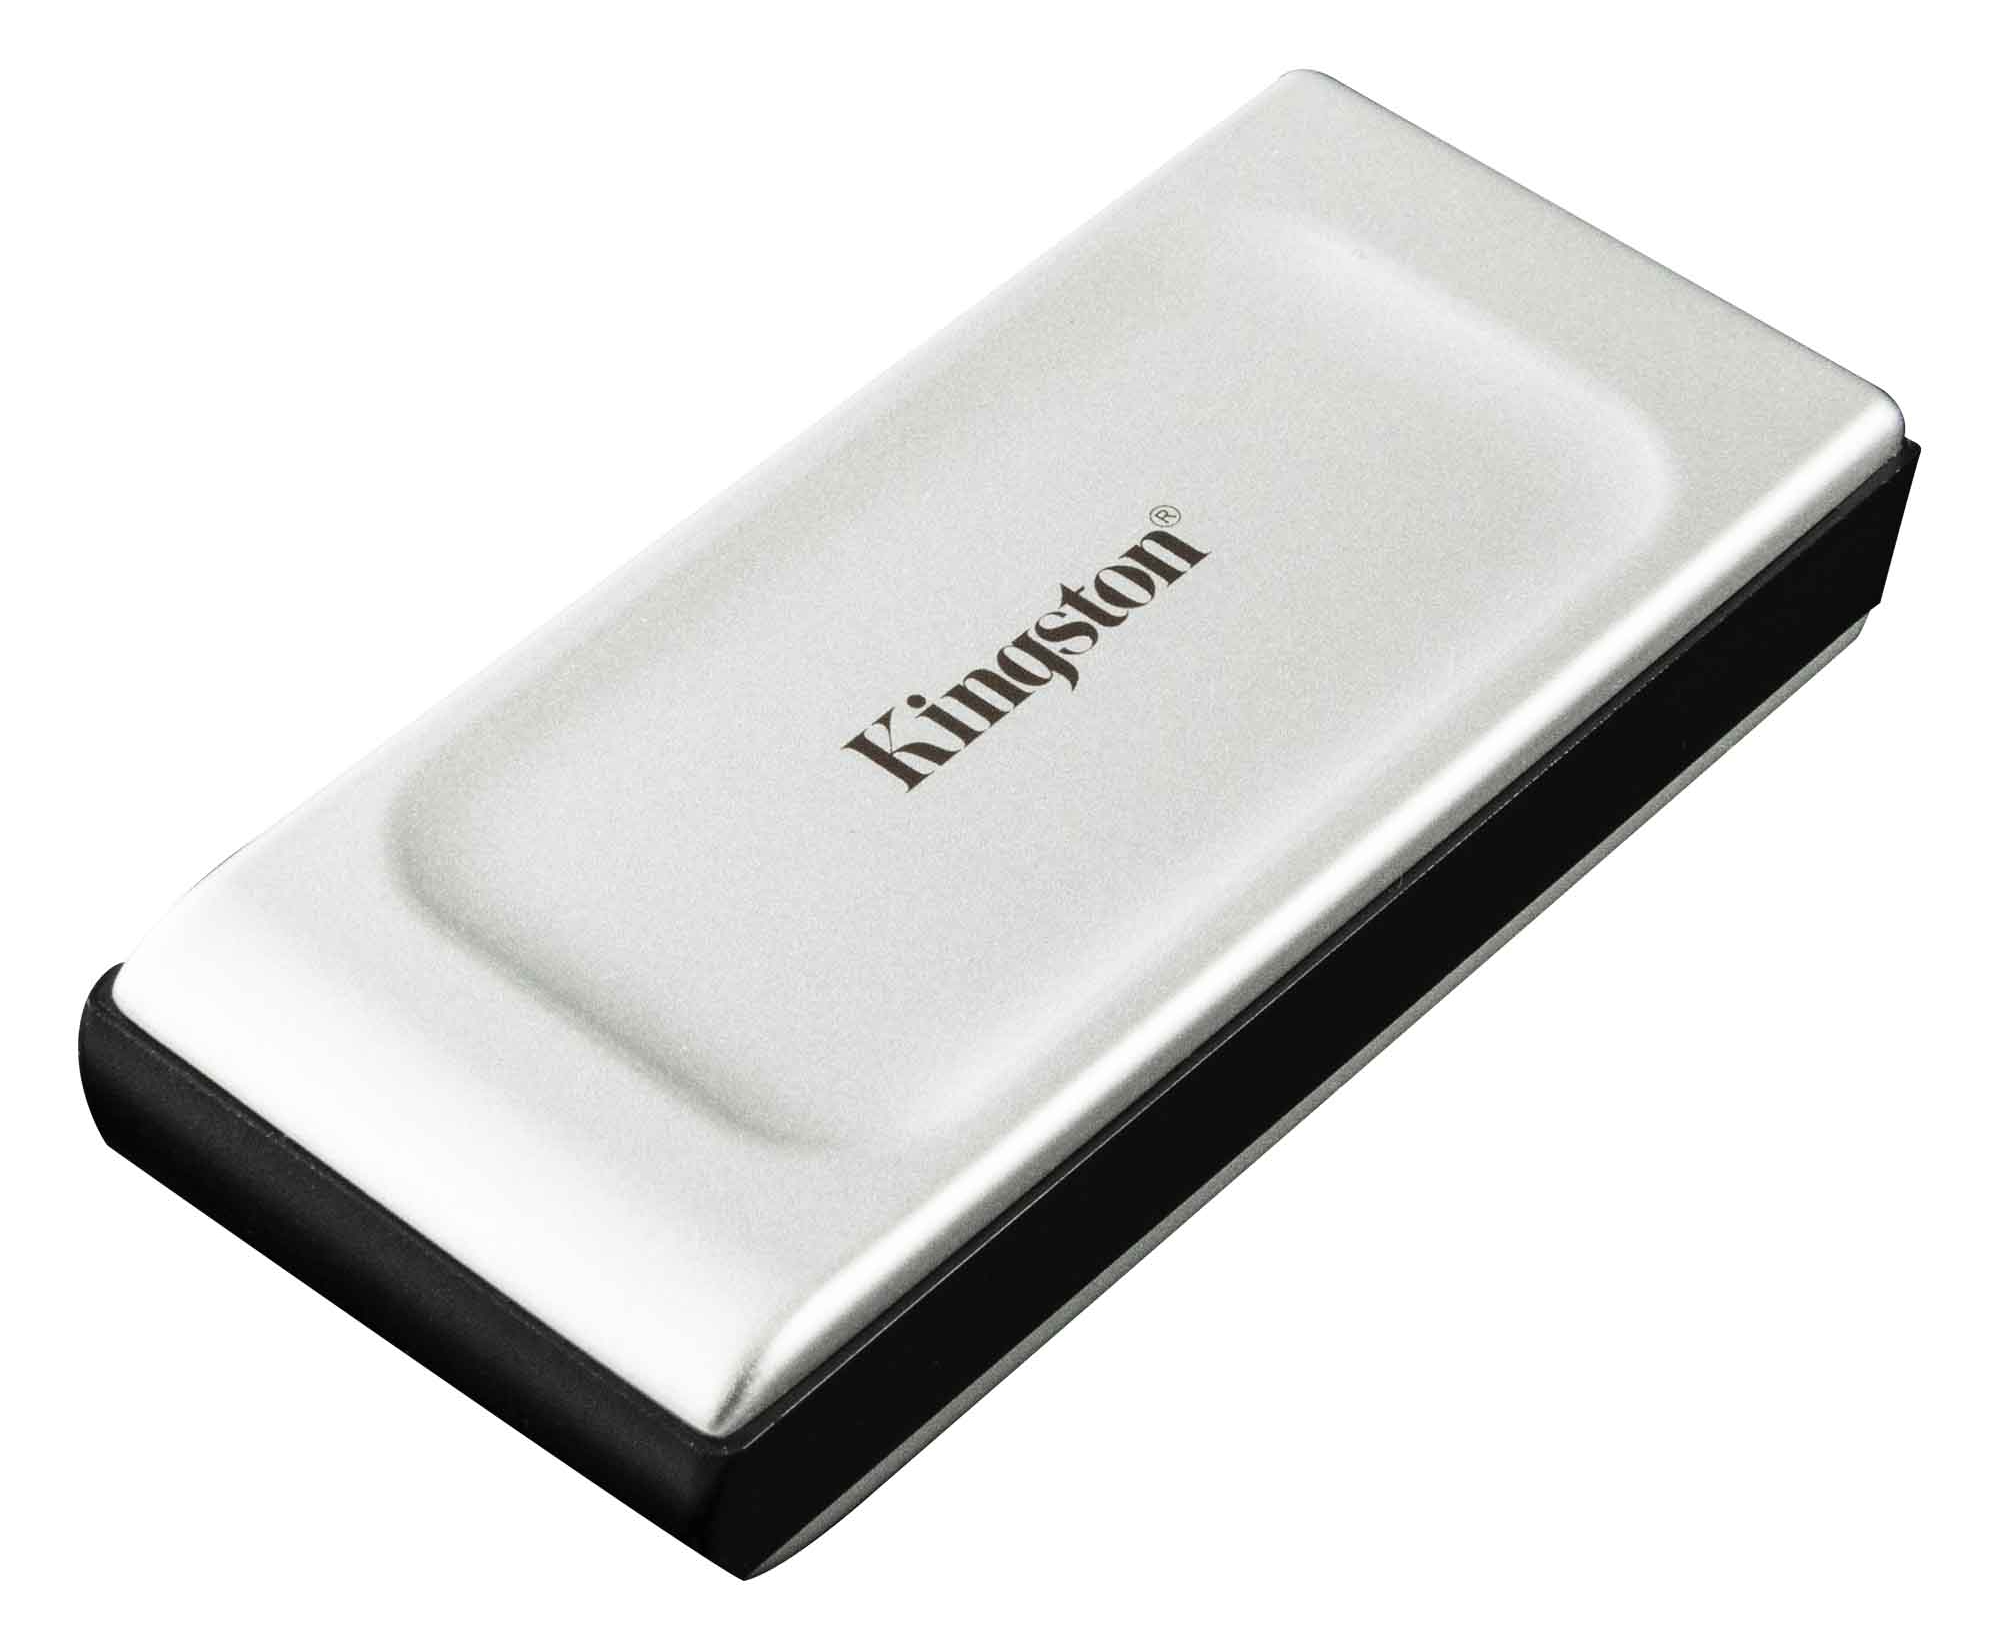 Kingston XS200 USB SSD - Most portable high-capacity 20Gbps external SSD